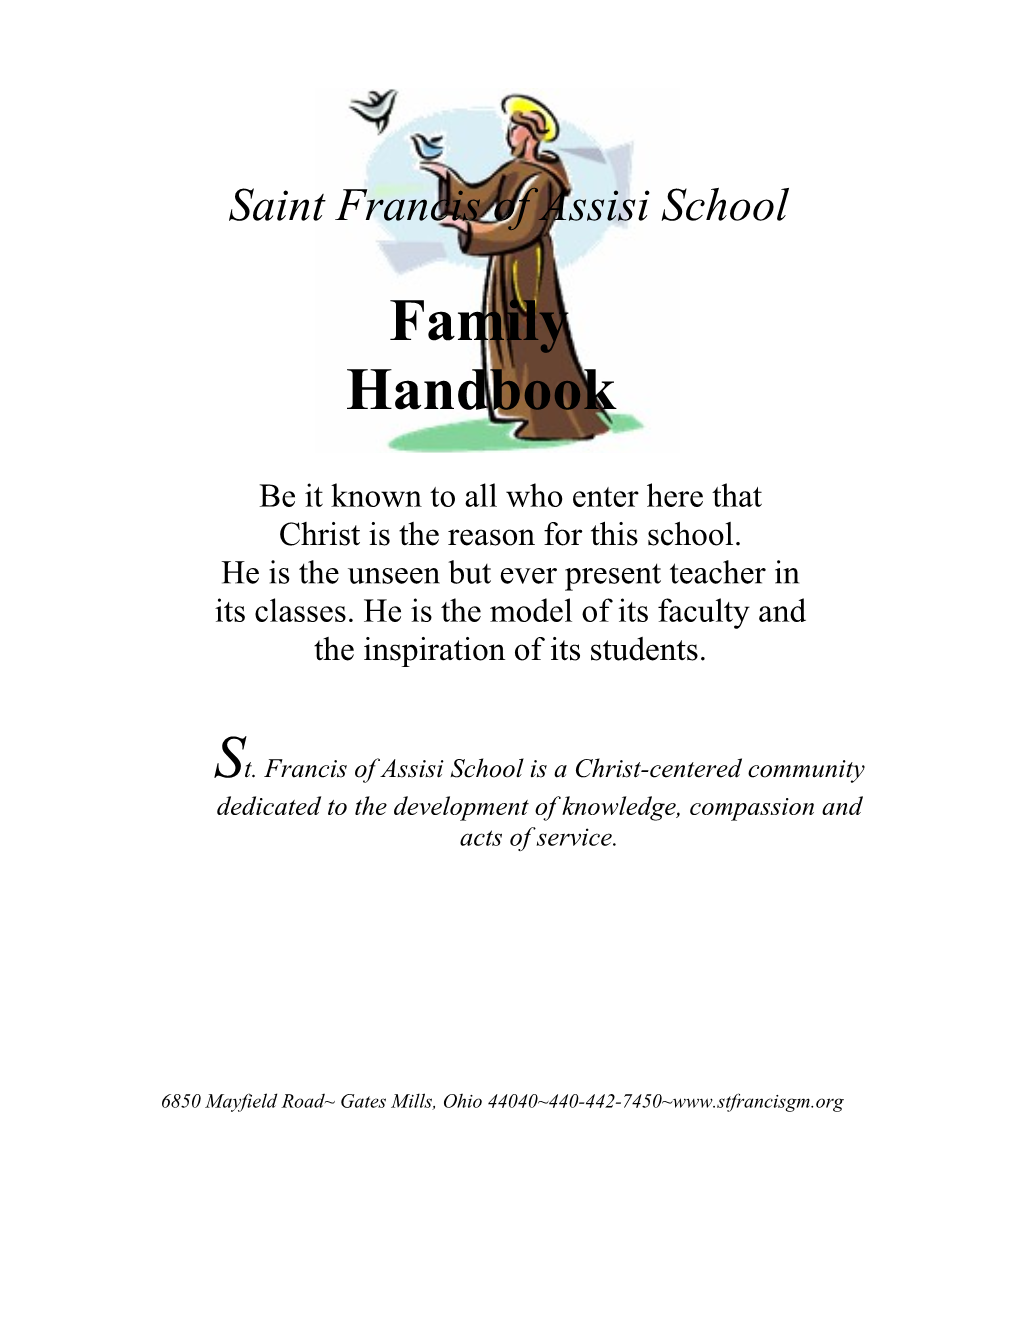 Saint Francis of Assisi School